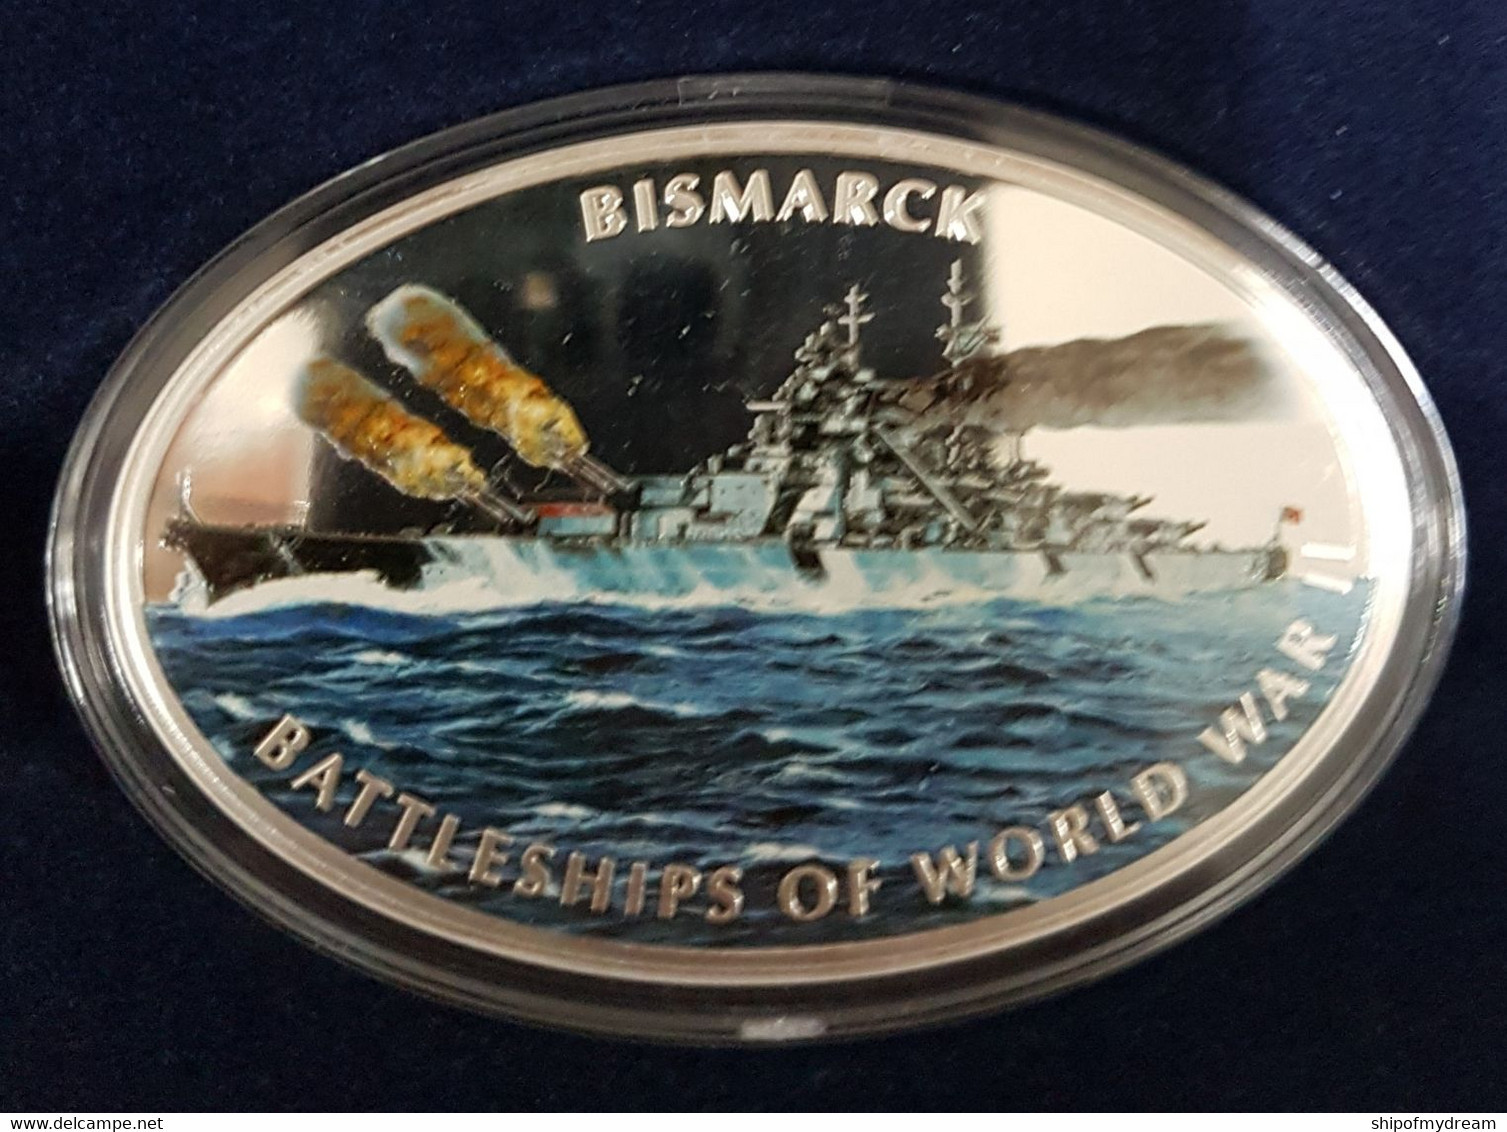 Tokelau 1$ 2013 "Battleships Of World War II" - Bismark. Proof. 2oz. Oval 70x45 Mm. Very Scarce. Mintage = 3000. - Andere - Oceanië